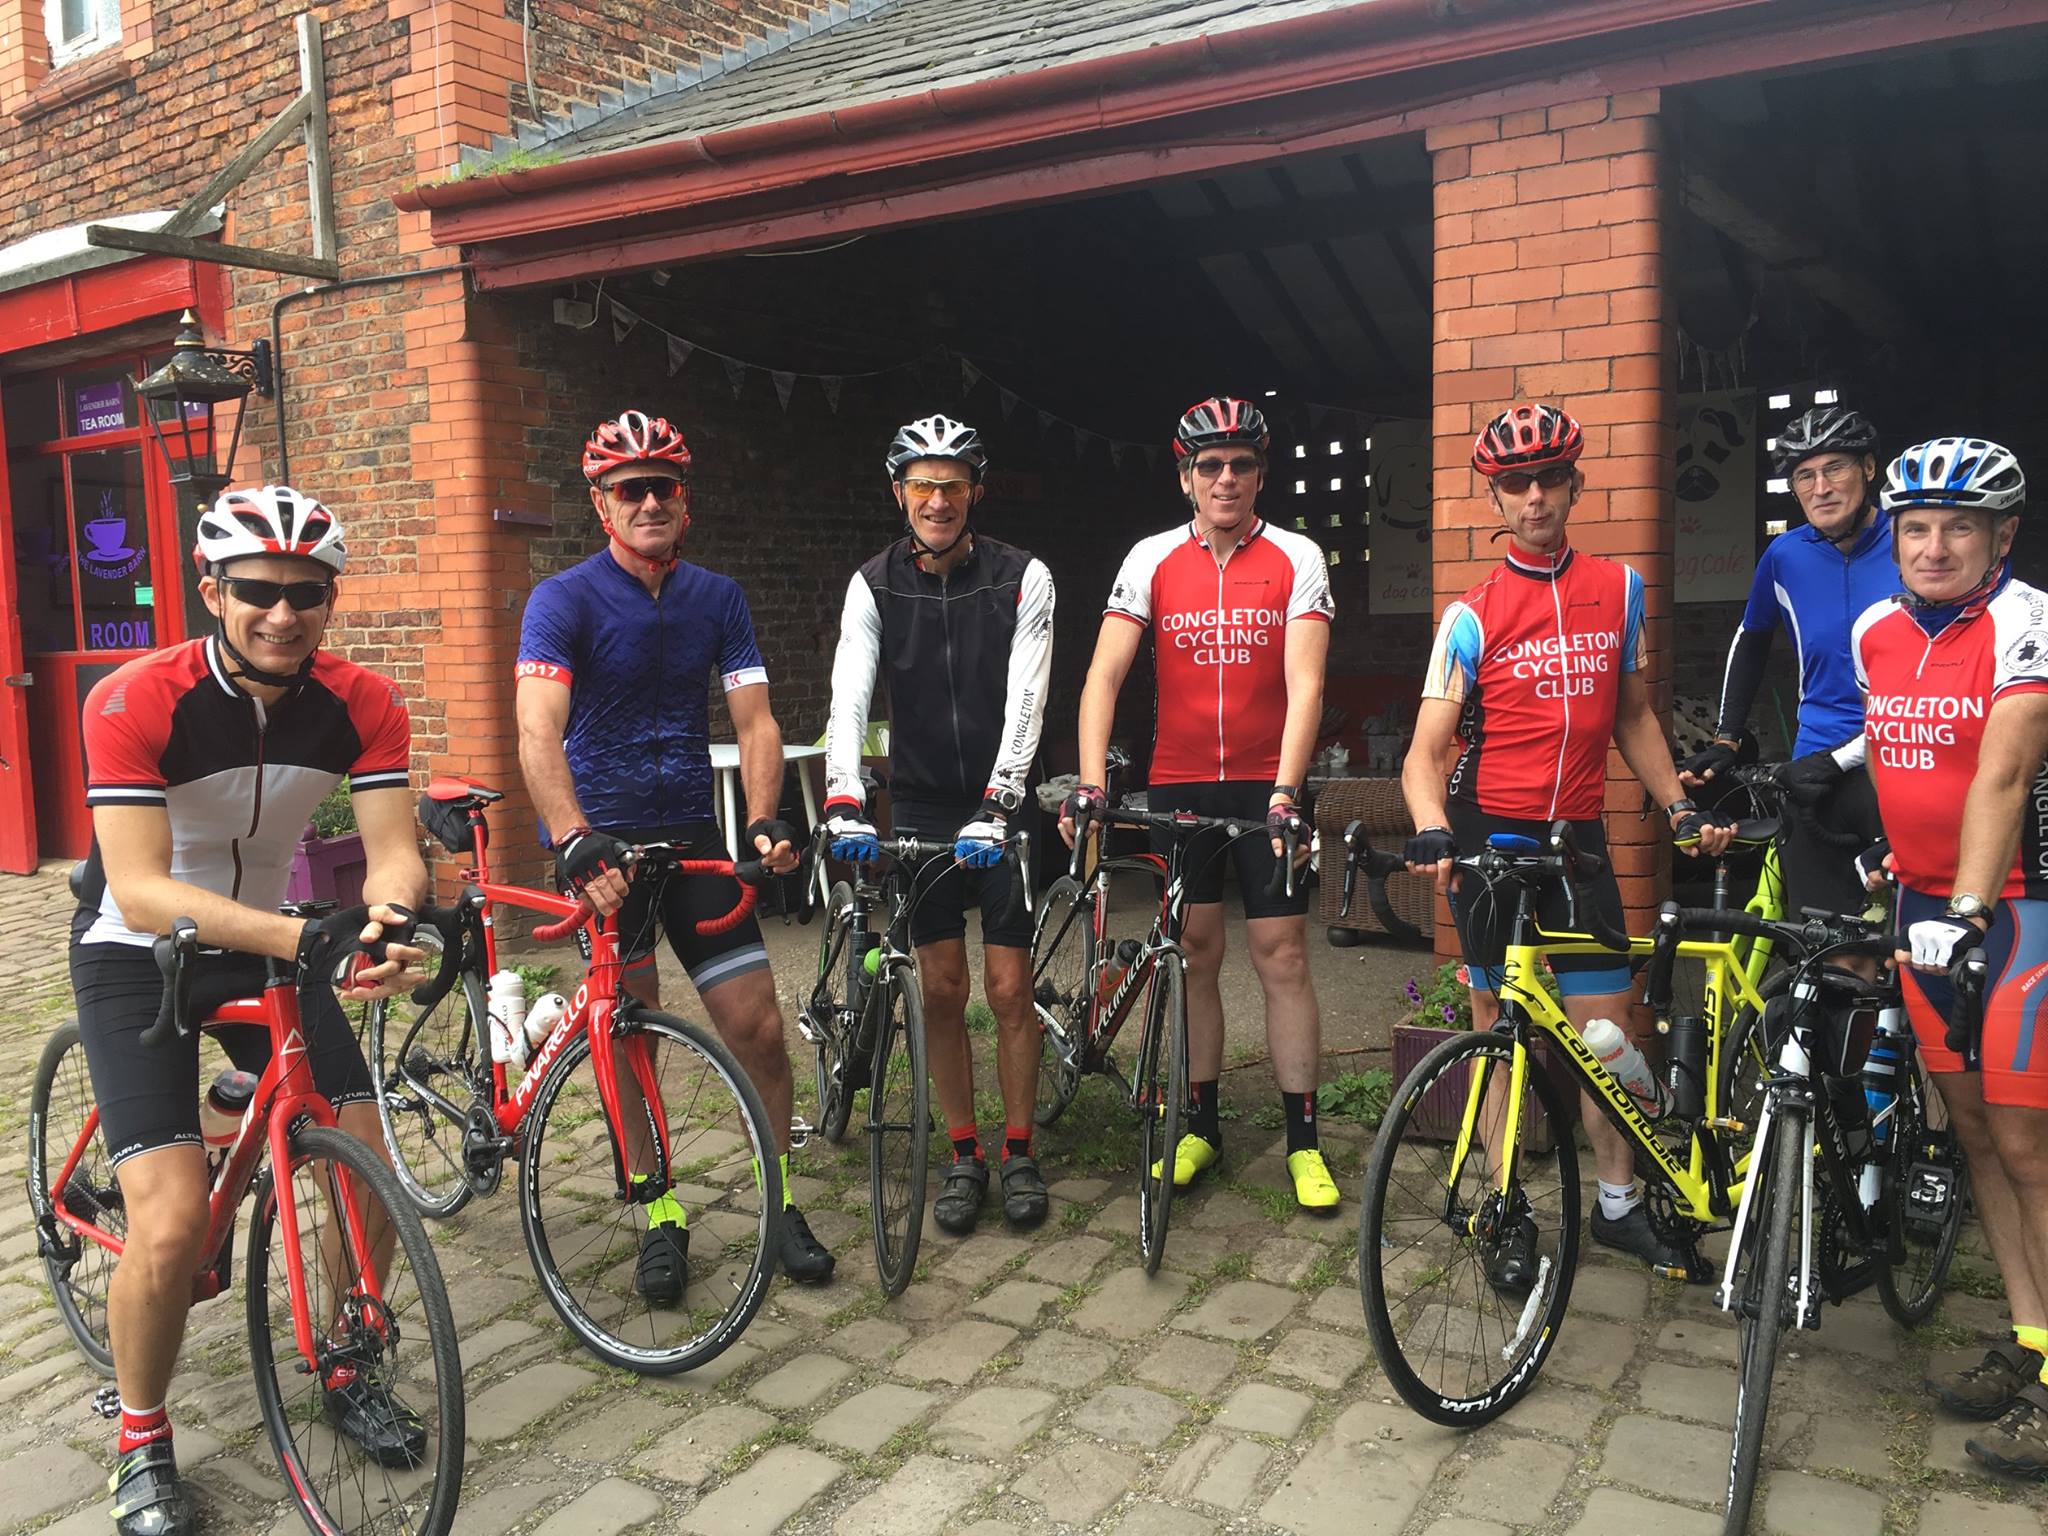 Congleton Cycling Club at the Lavender Barn